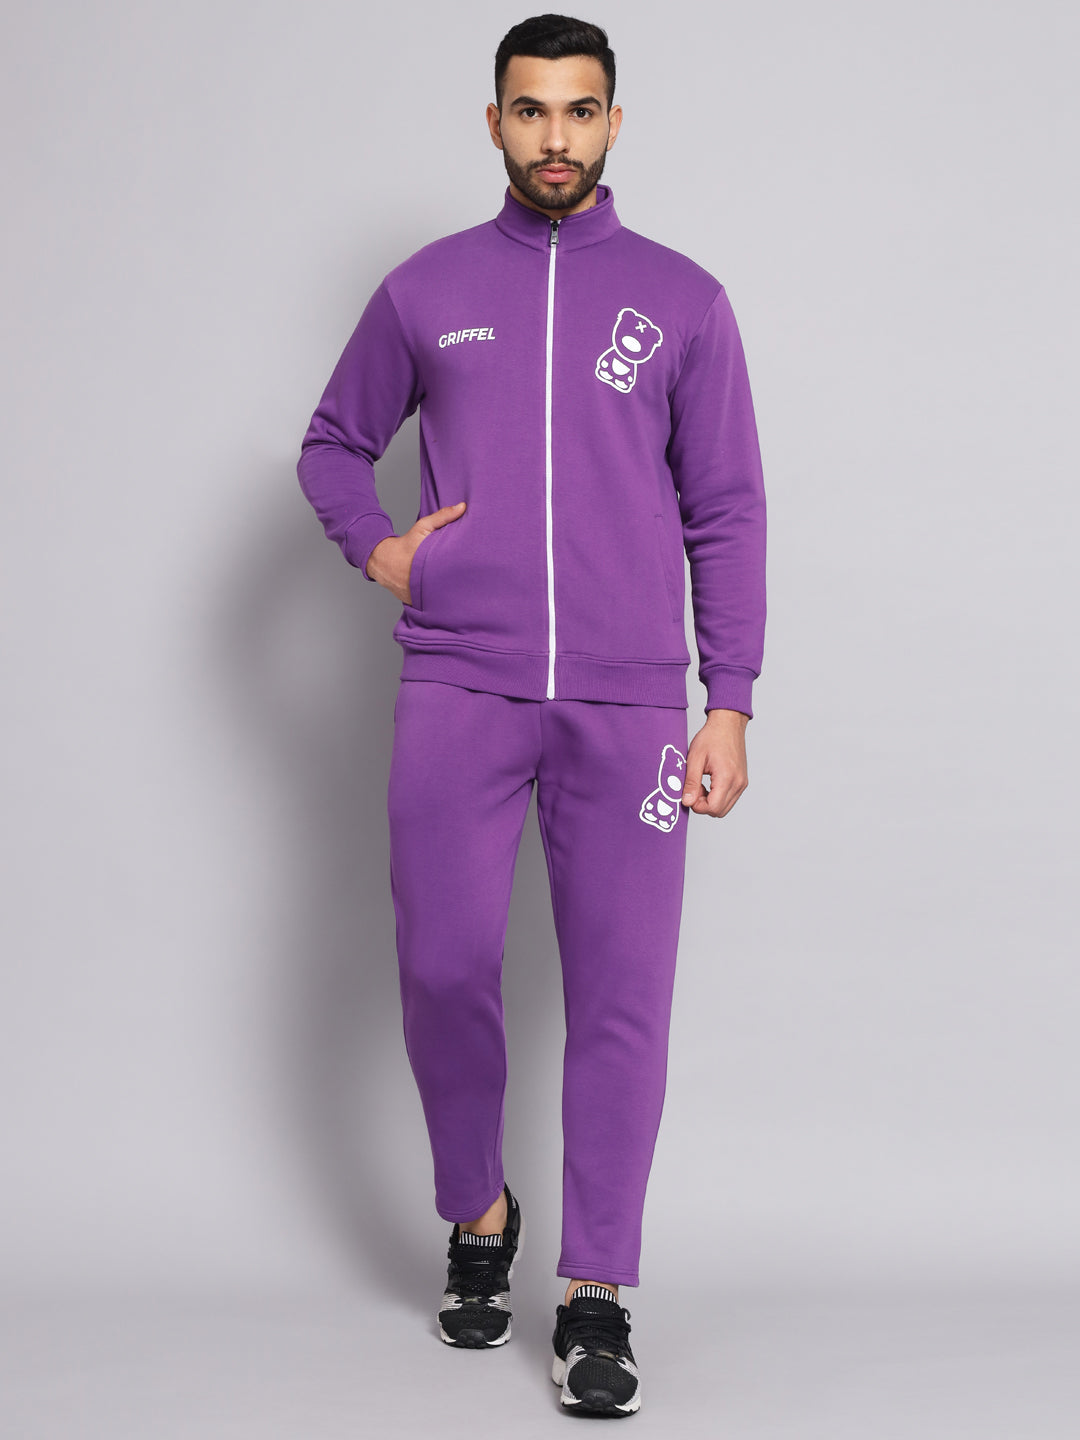 Griffel Men's Front Logo Print Fleece Zipper and Jogger Full set Dark Purple Tracksuit - griffel